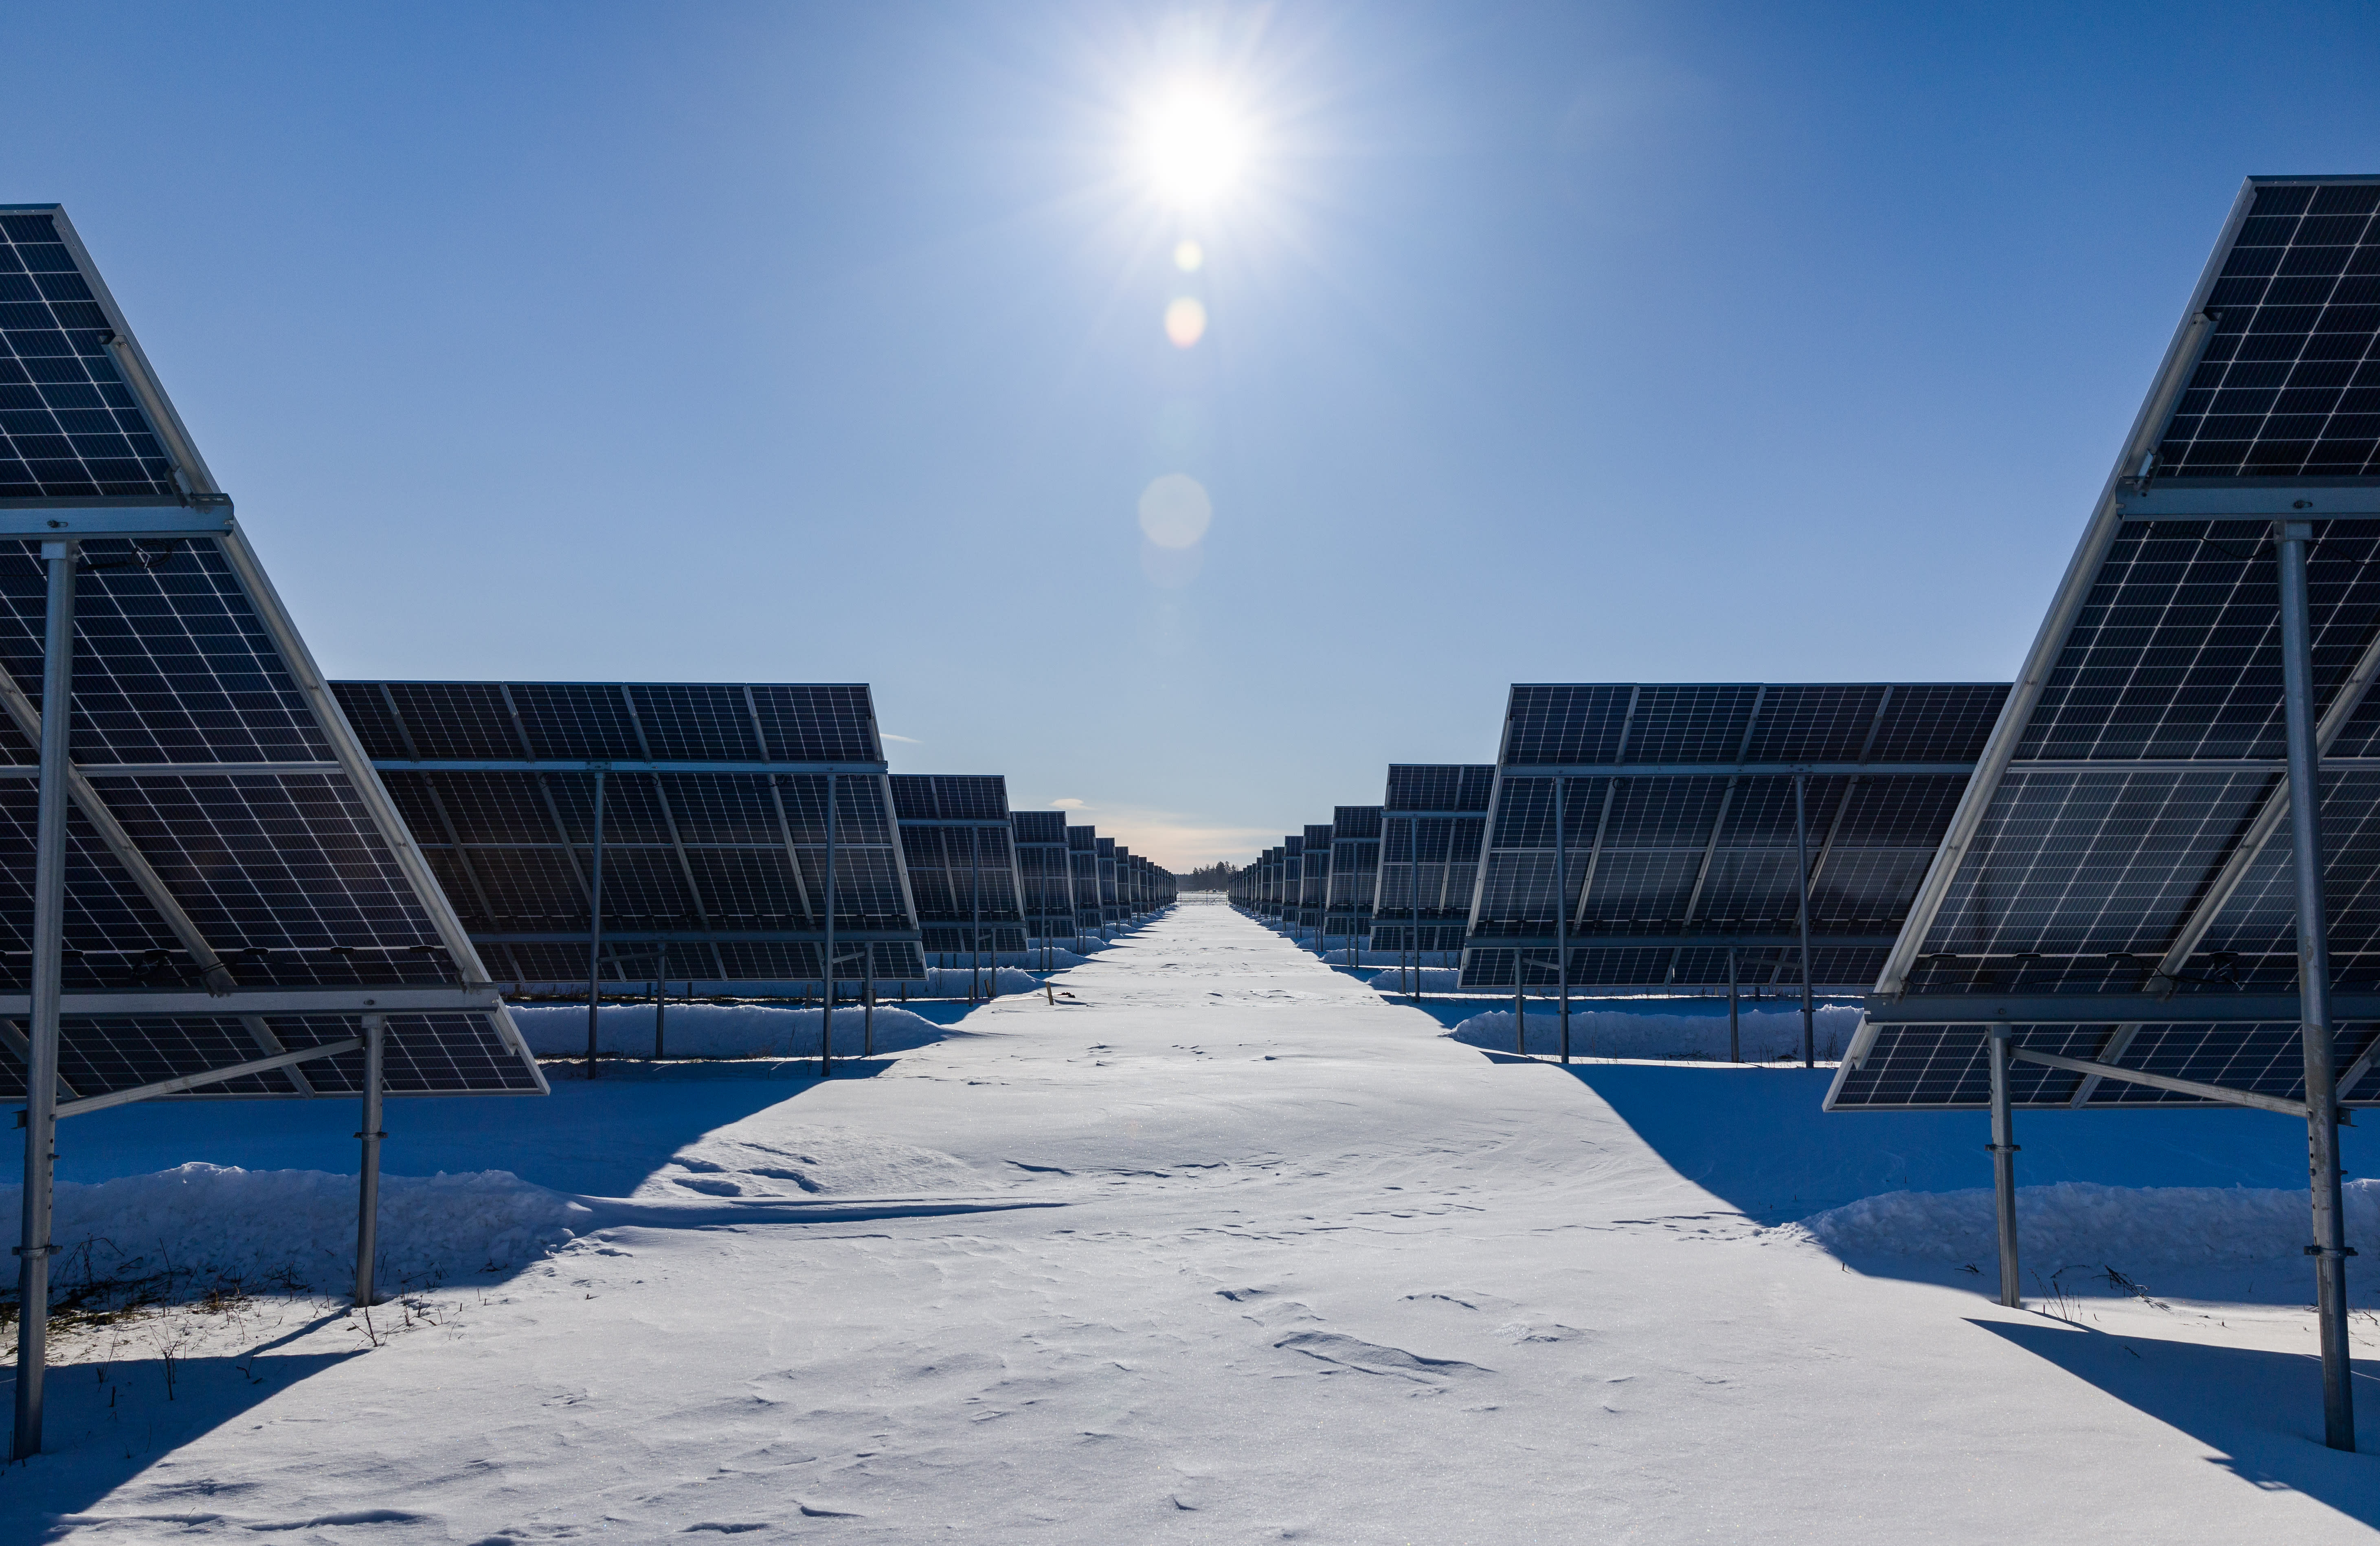 The solar energy boom may hit a grid bottleneck